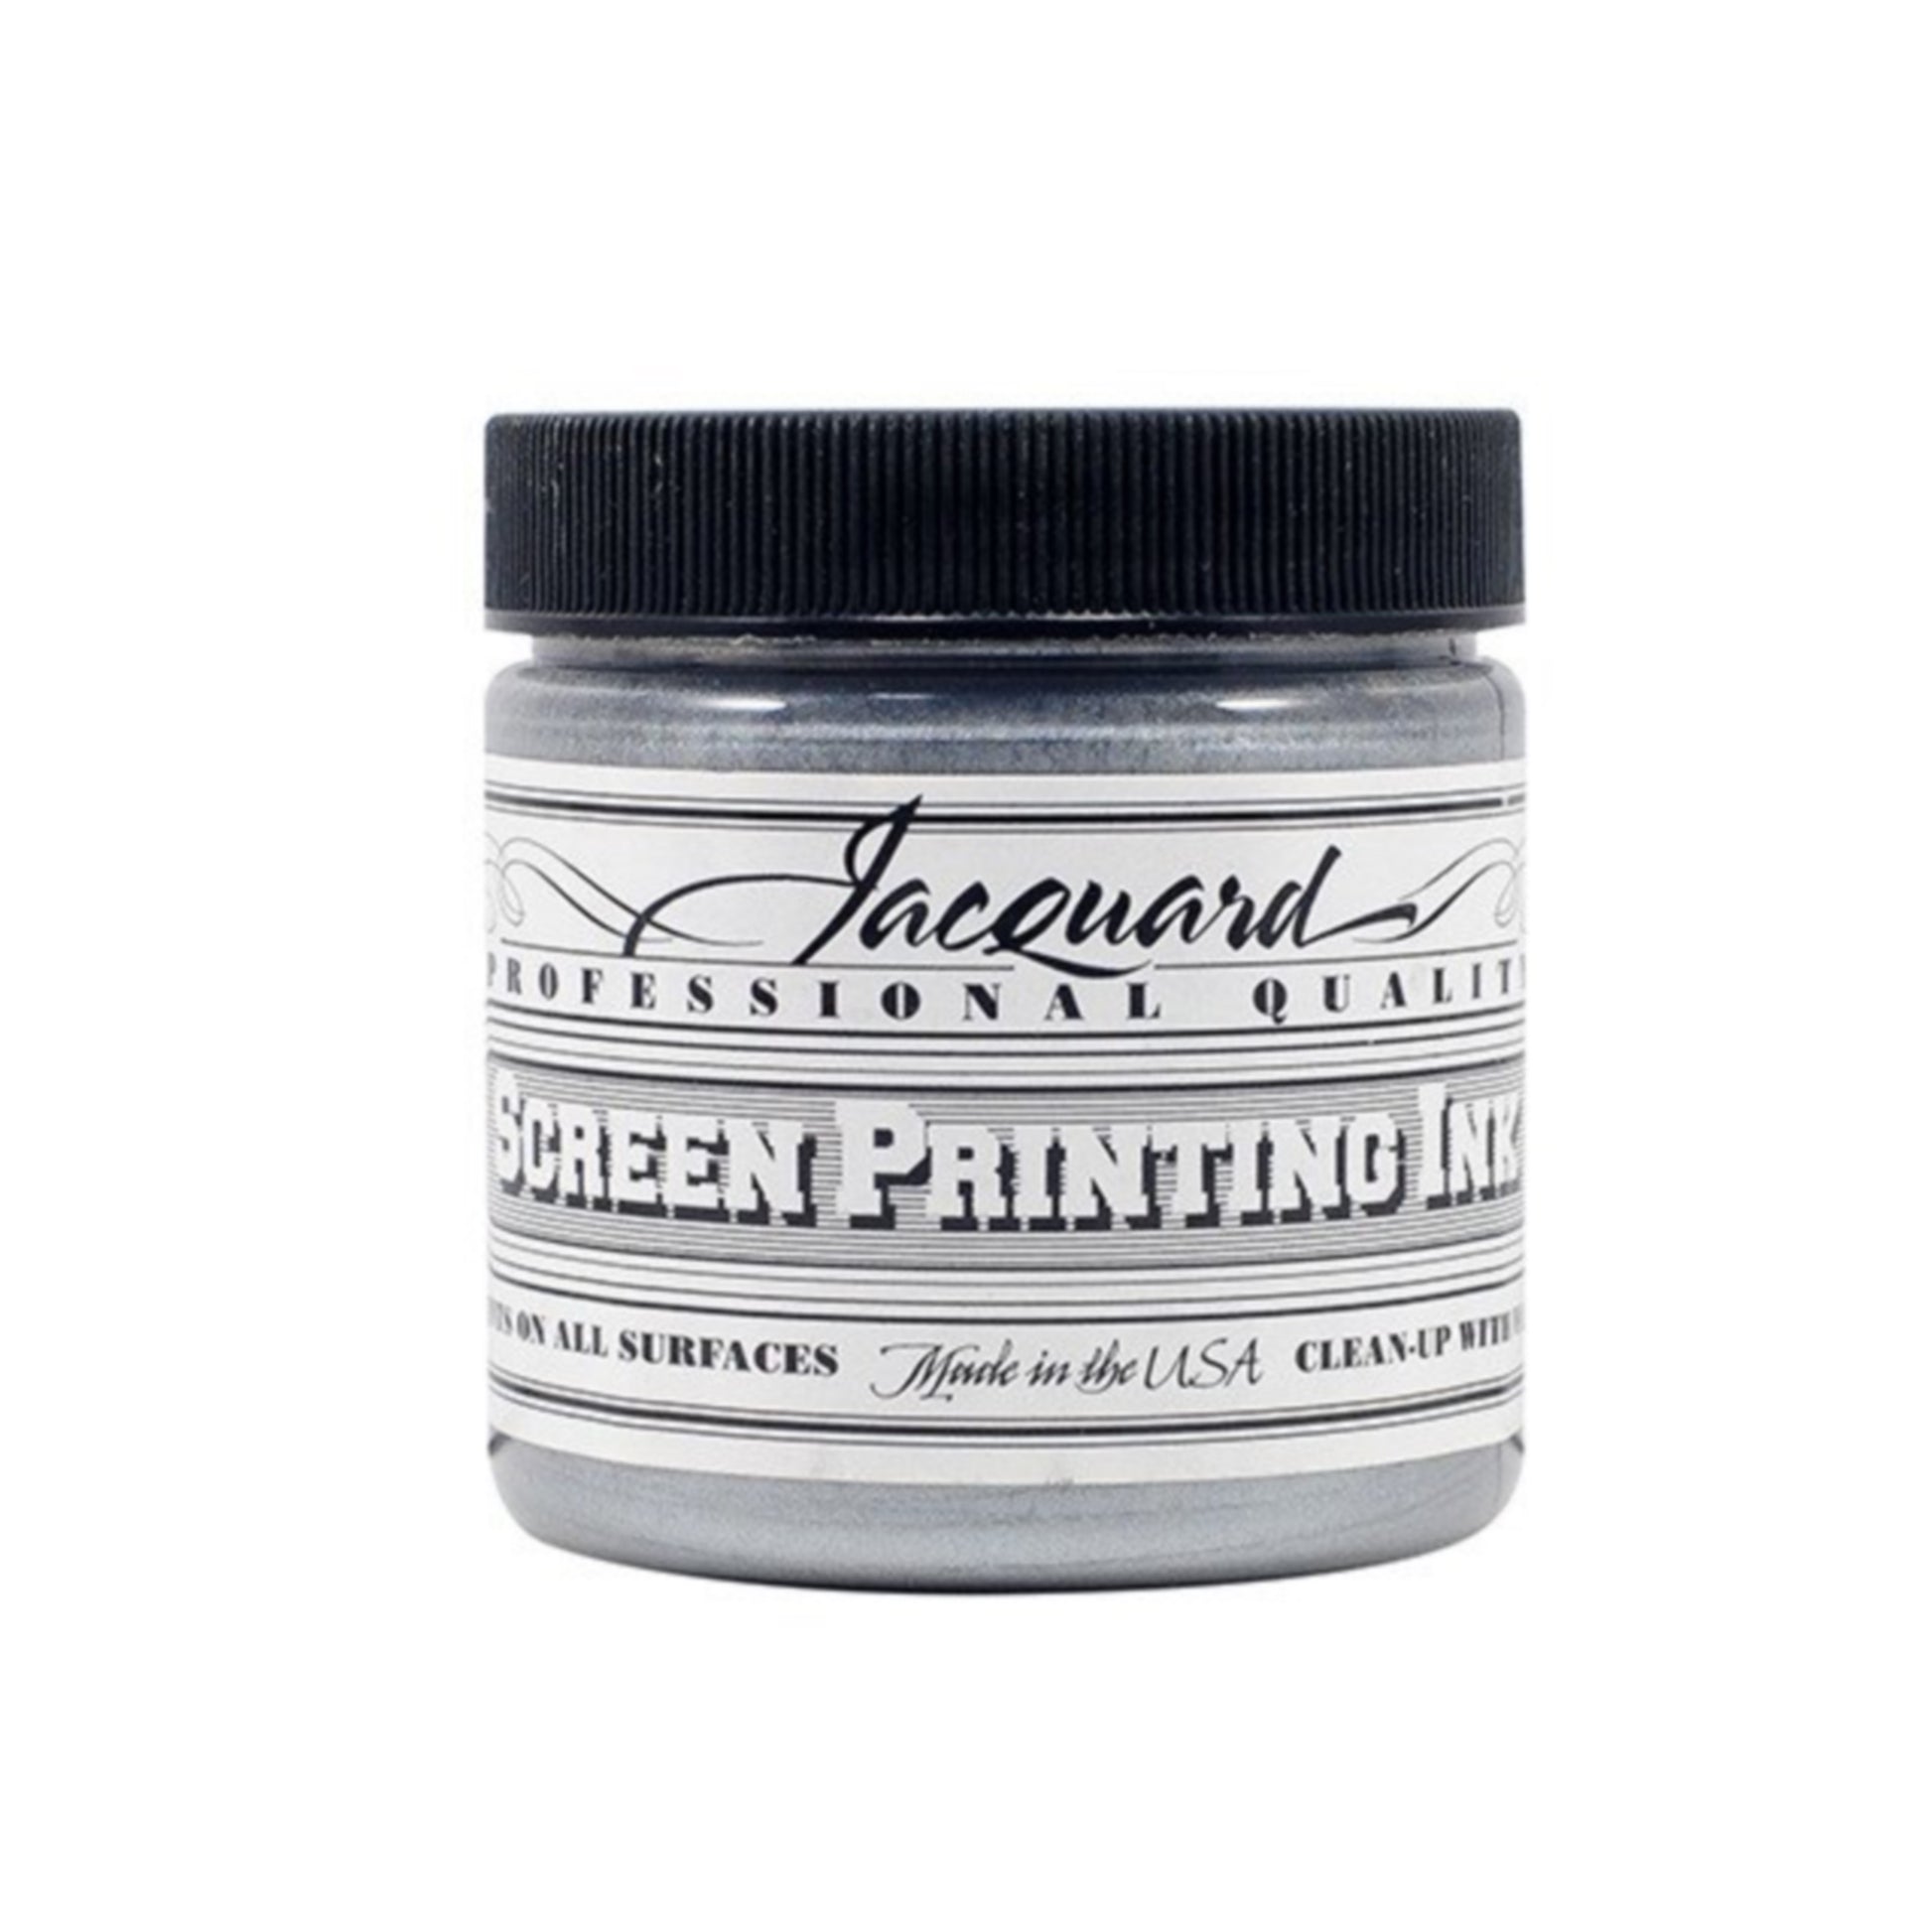 Jacquard Screen Printing Ink - Small Jar (4 fl. oz.) / 122 Silver by Jacquard - K. A. Artist Shop